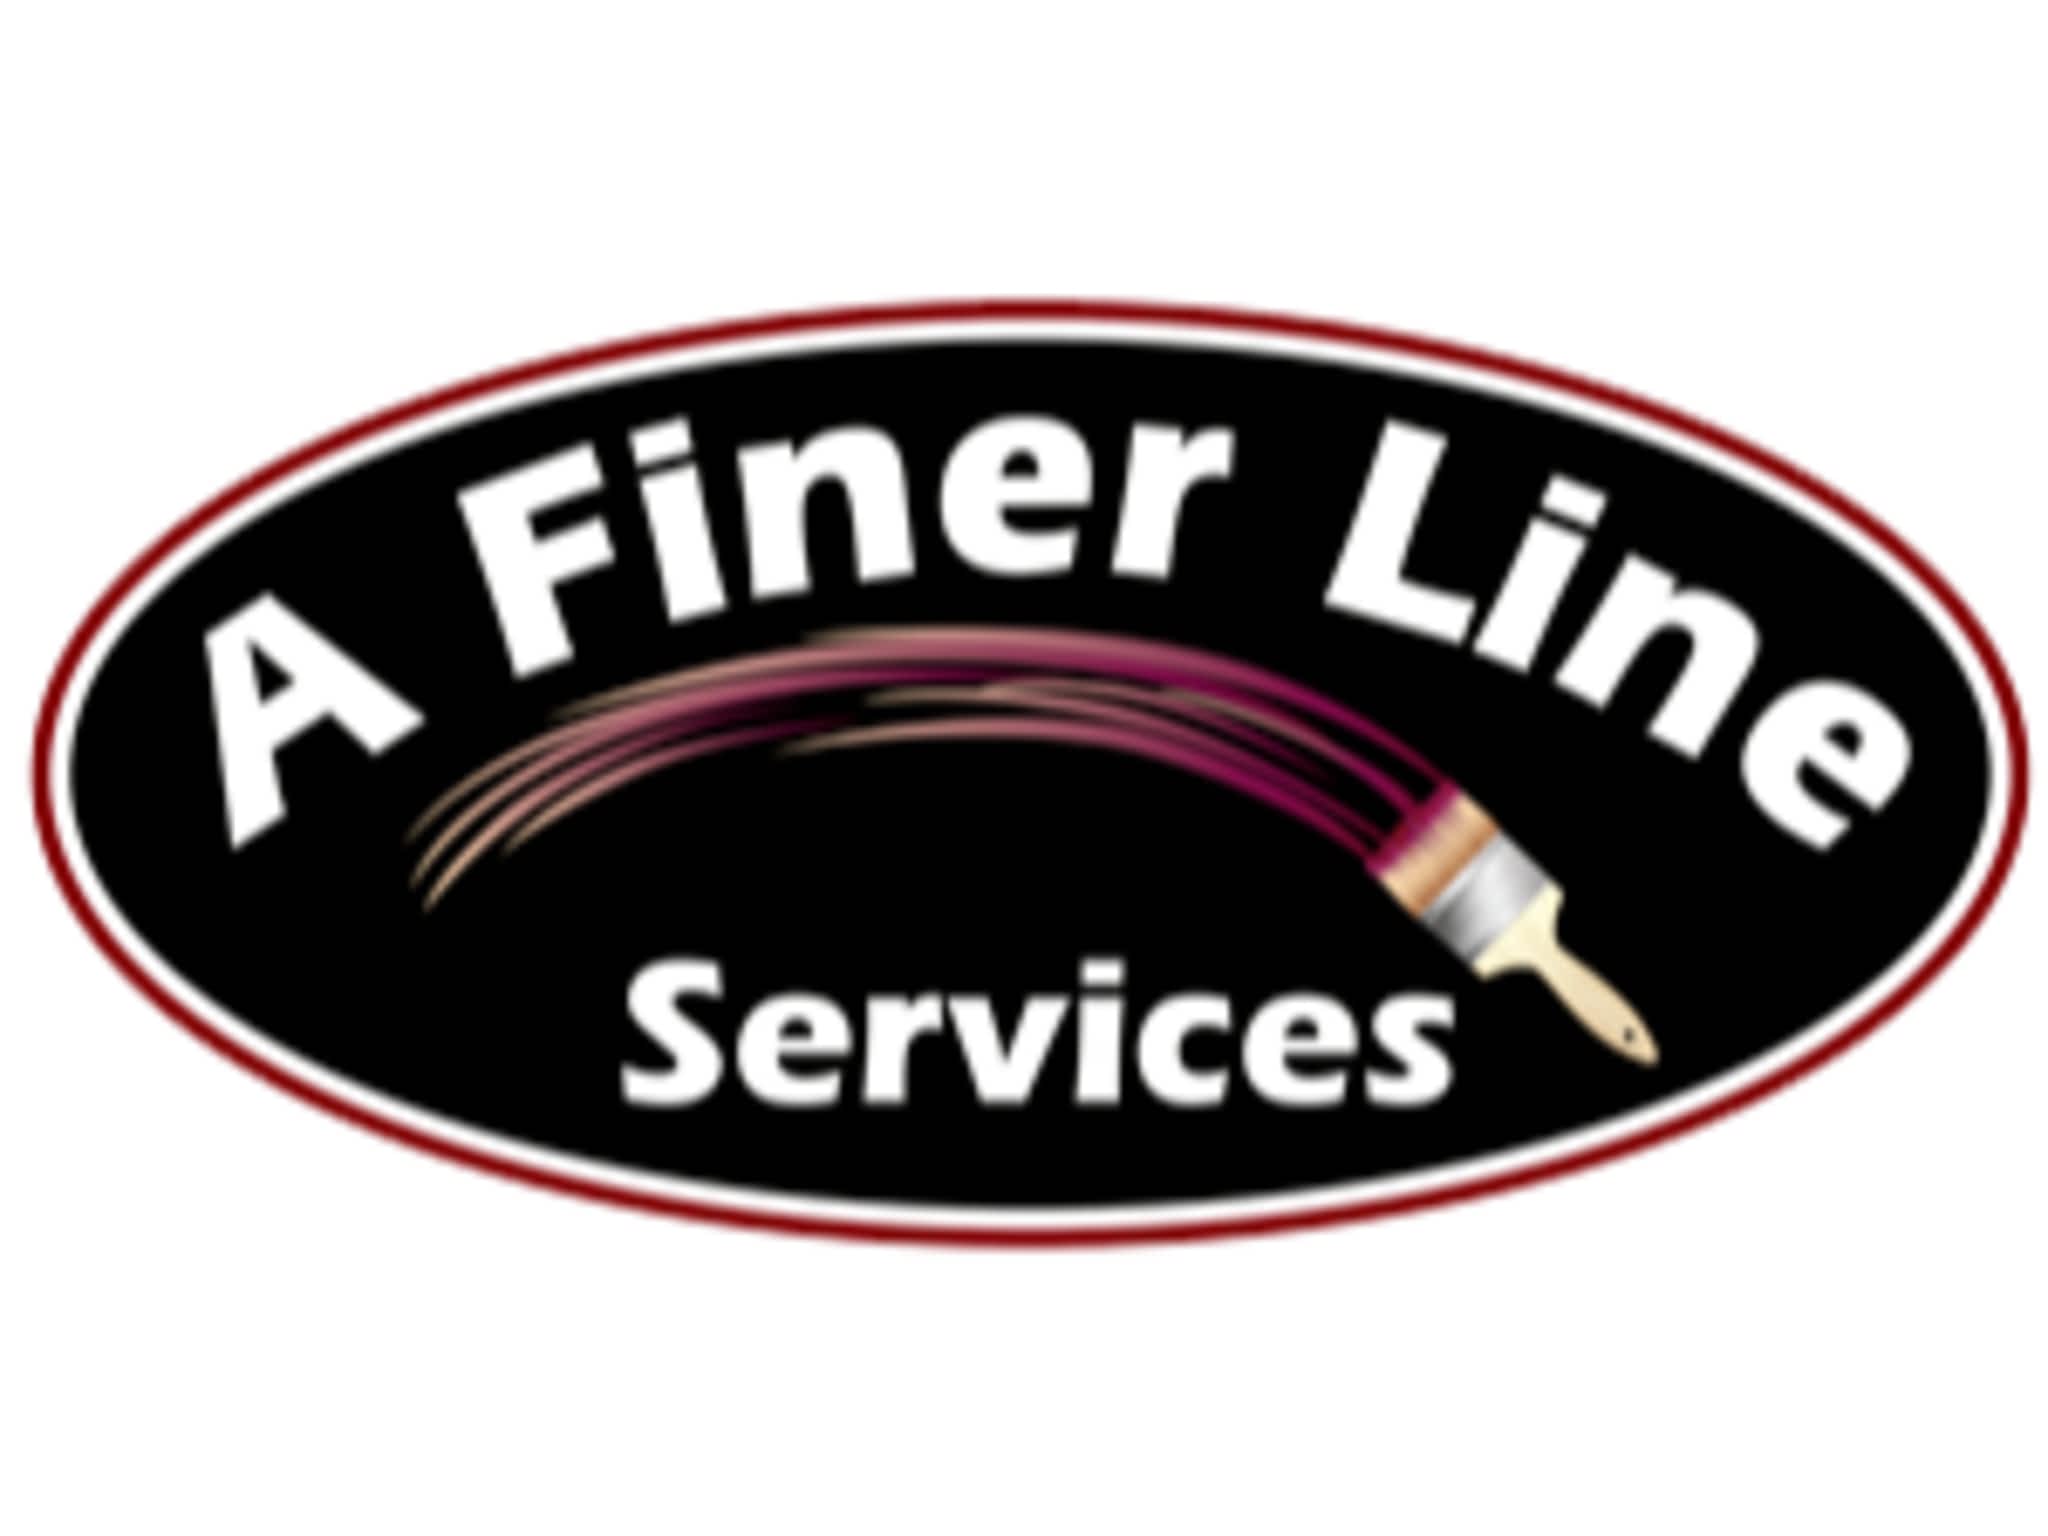 photo A Finer Line Services